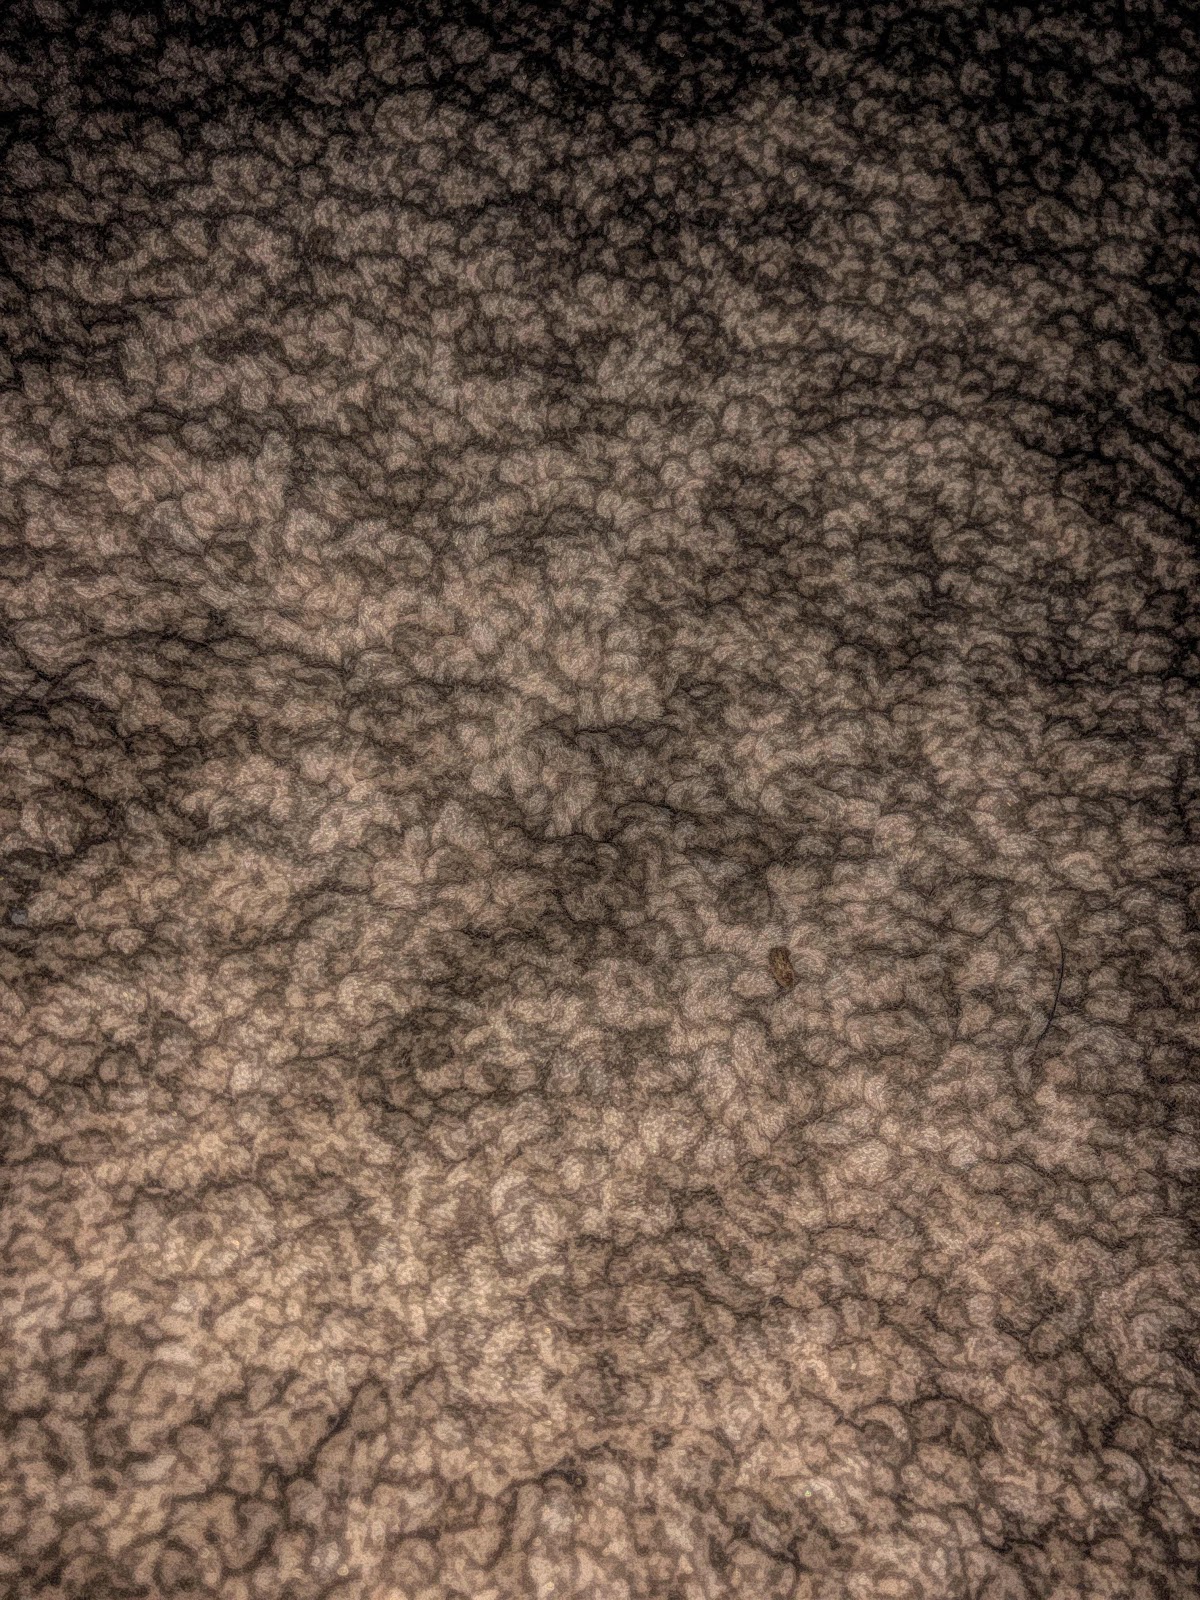 Carpet free picture